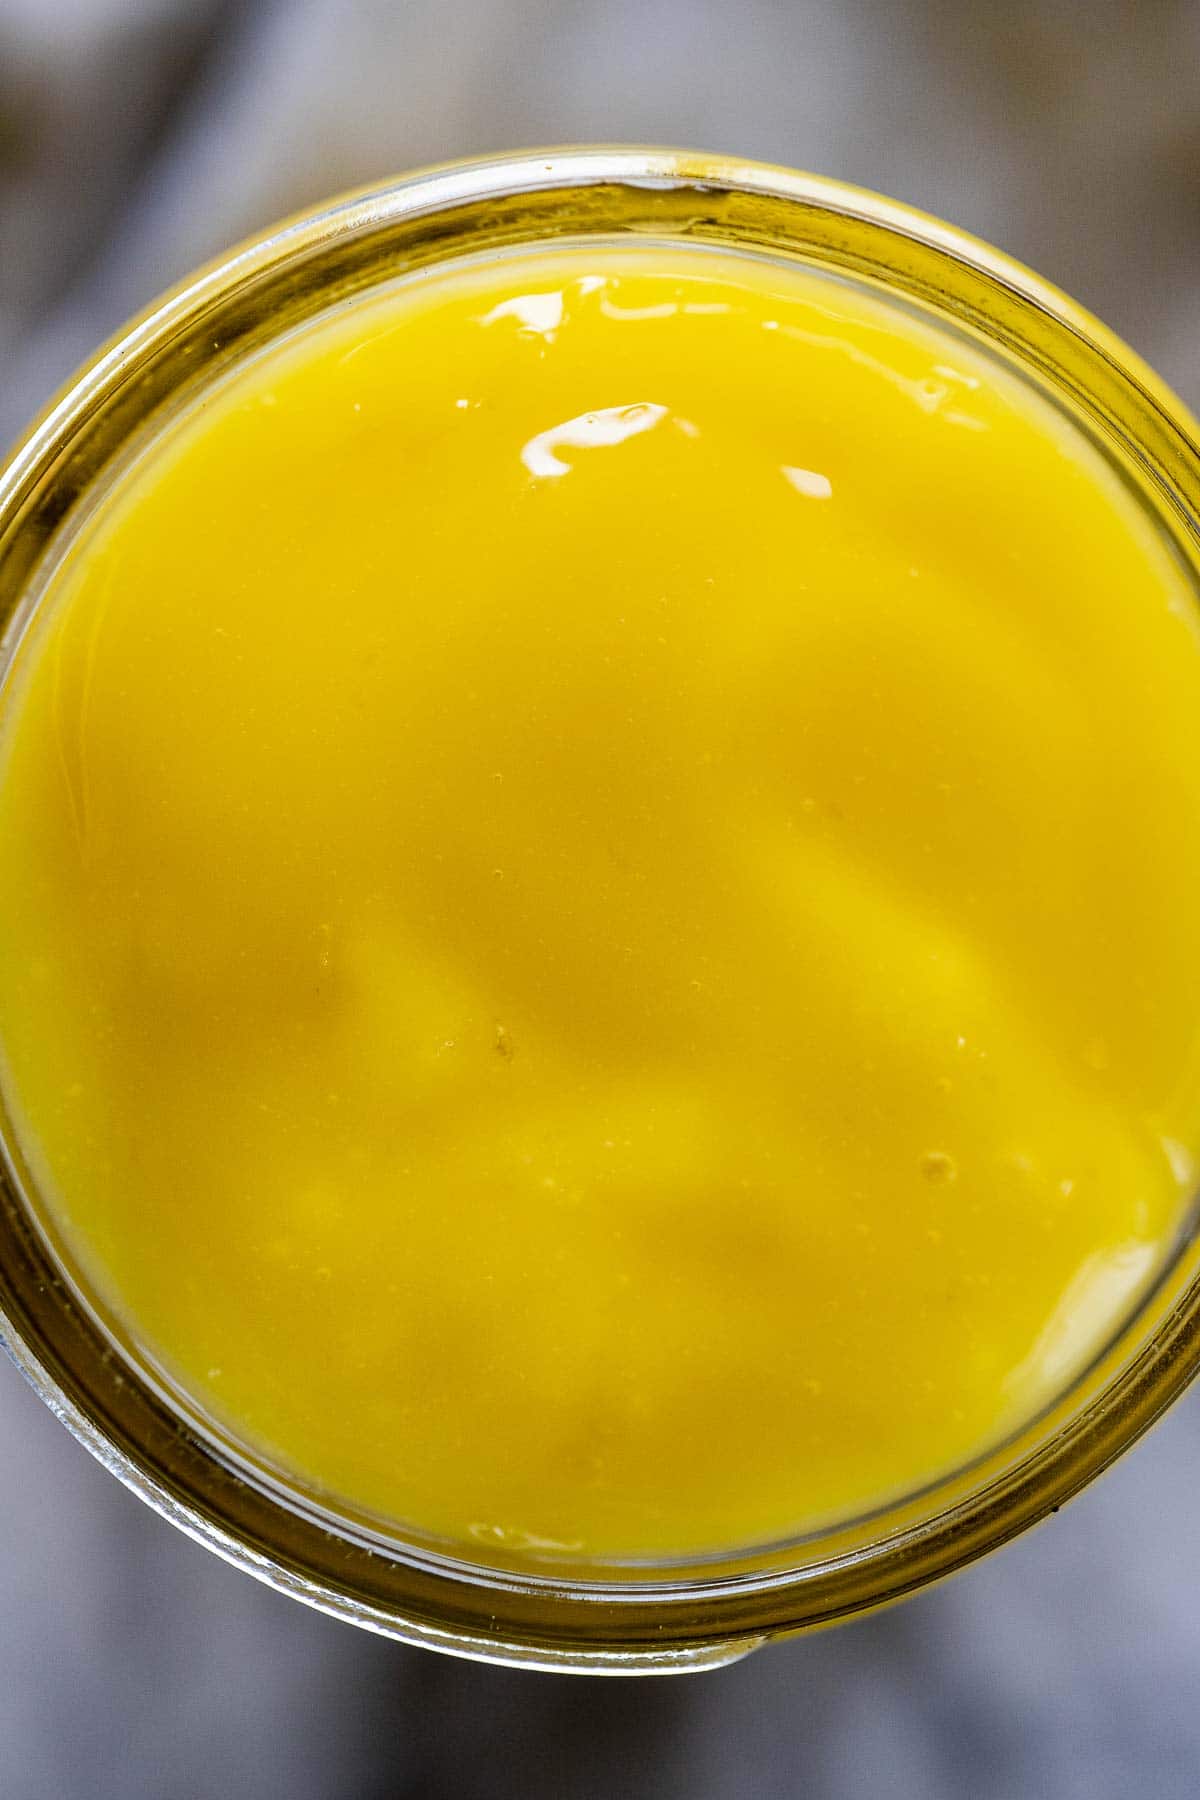 Overhead view of a jar of lemon curd.